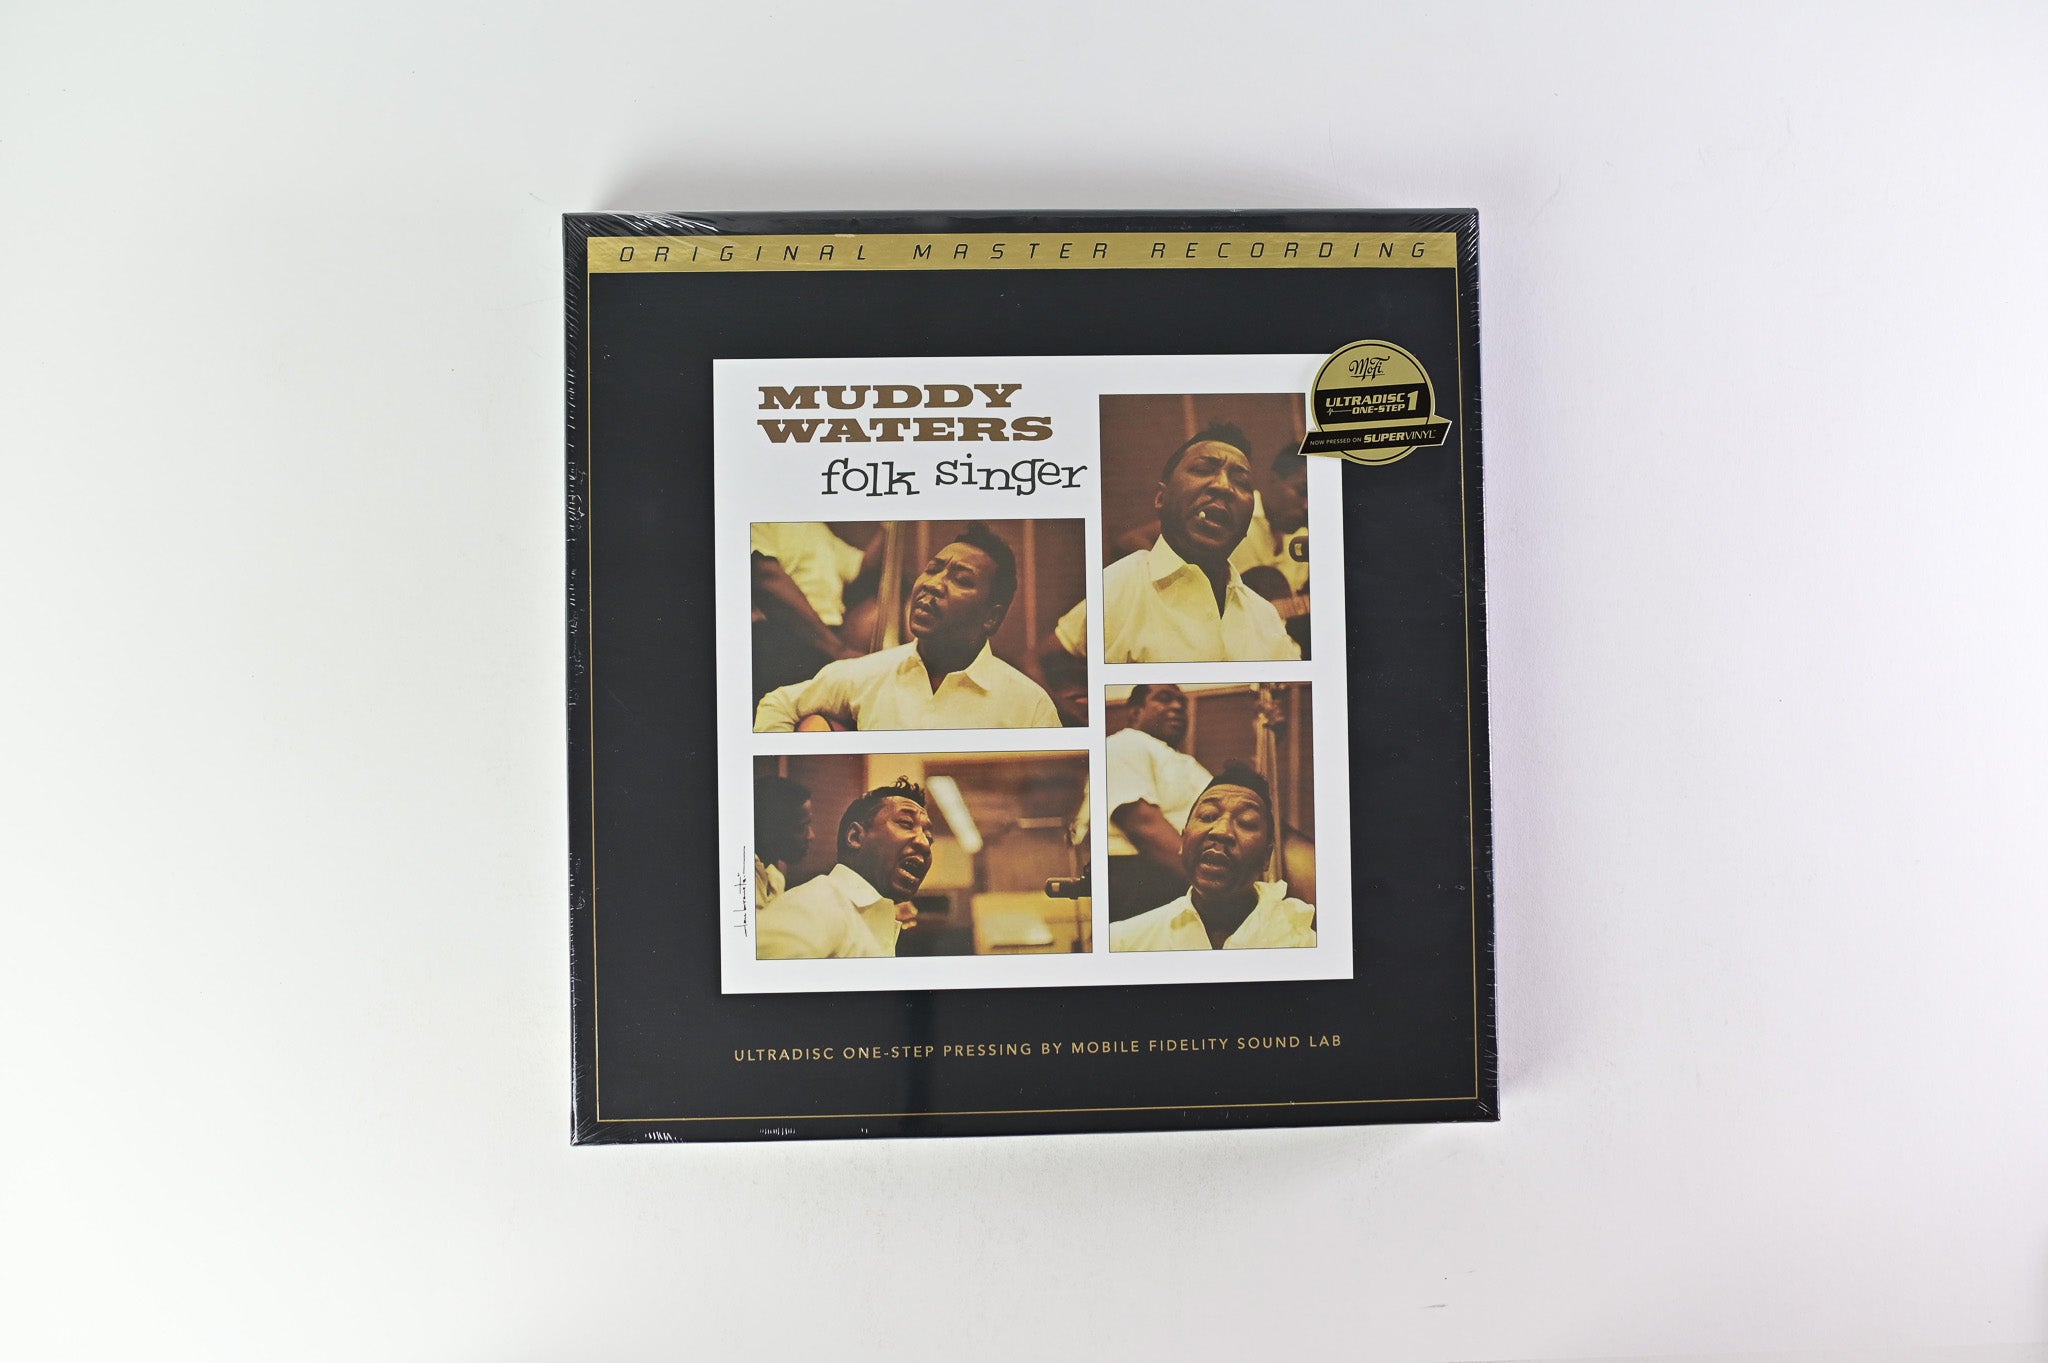 Muddy Waters - Folk Singer on Mobile Fidelity Sound Lab 45 RPM 180 Gram SuperVinyl Reissue Sealed